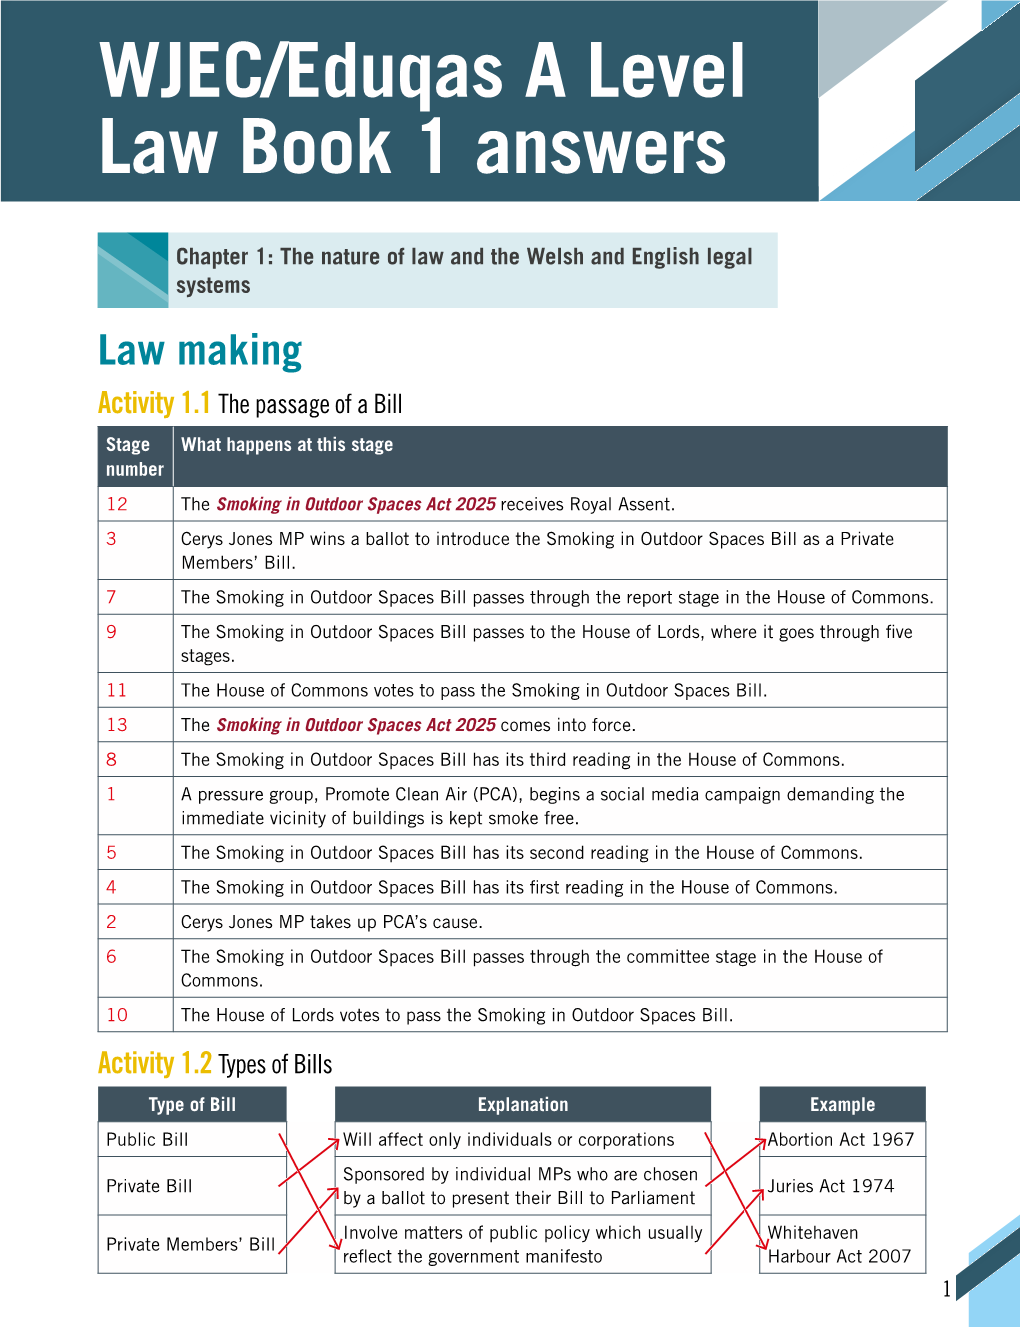 WJEC/Eduqas a Level Law Book 1 Answers